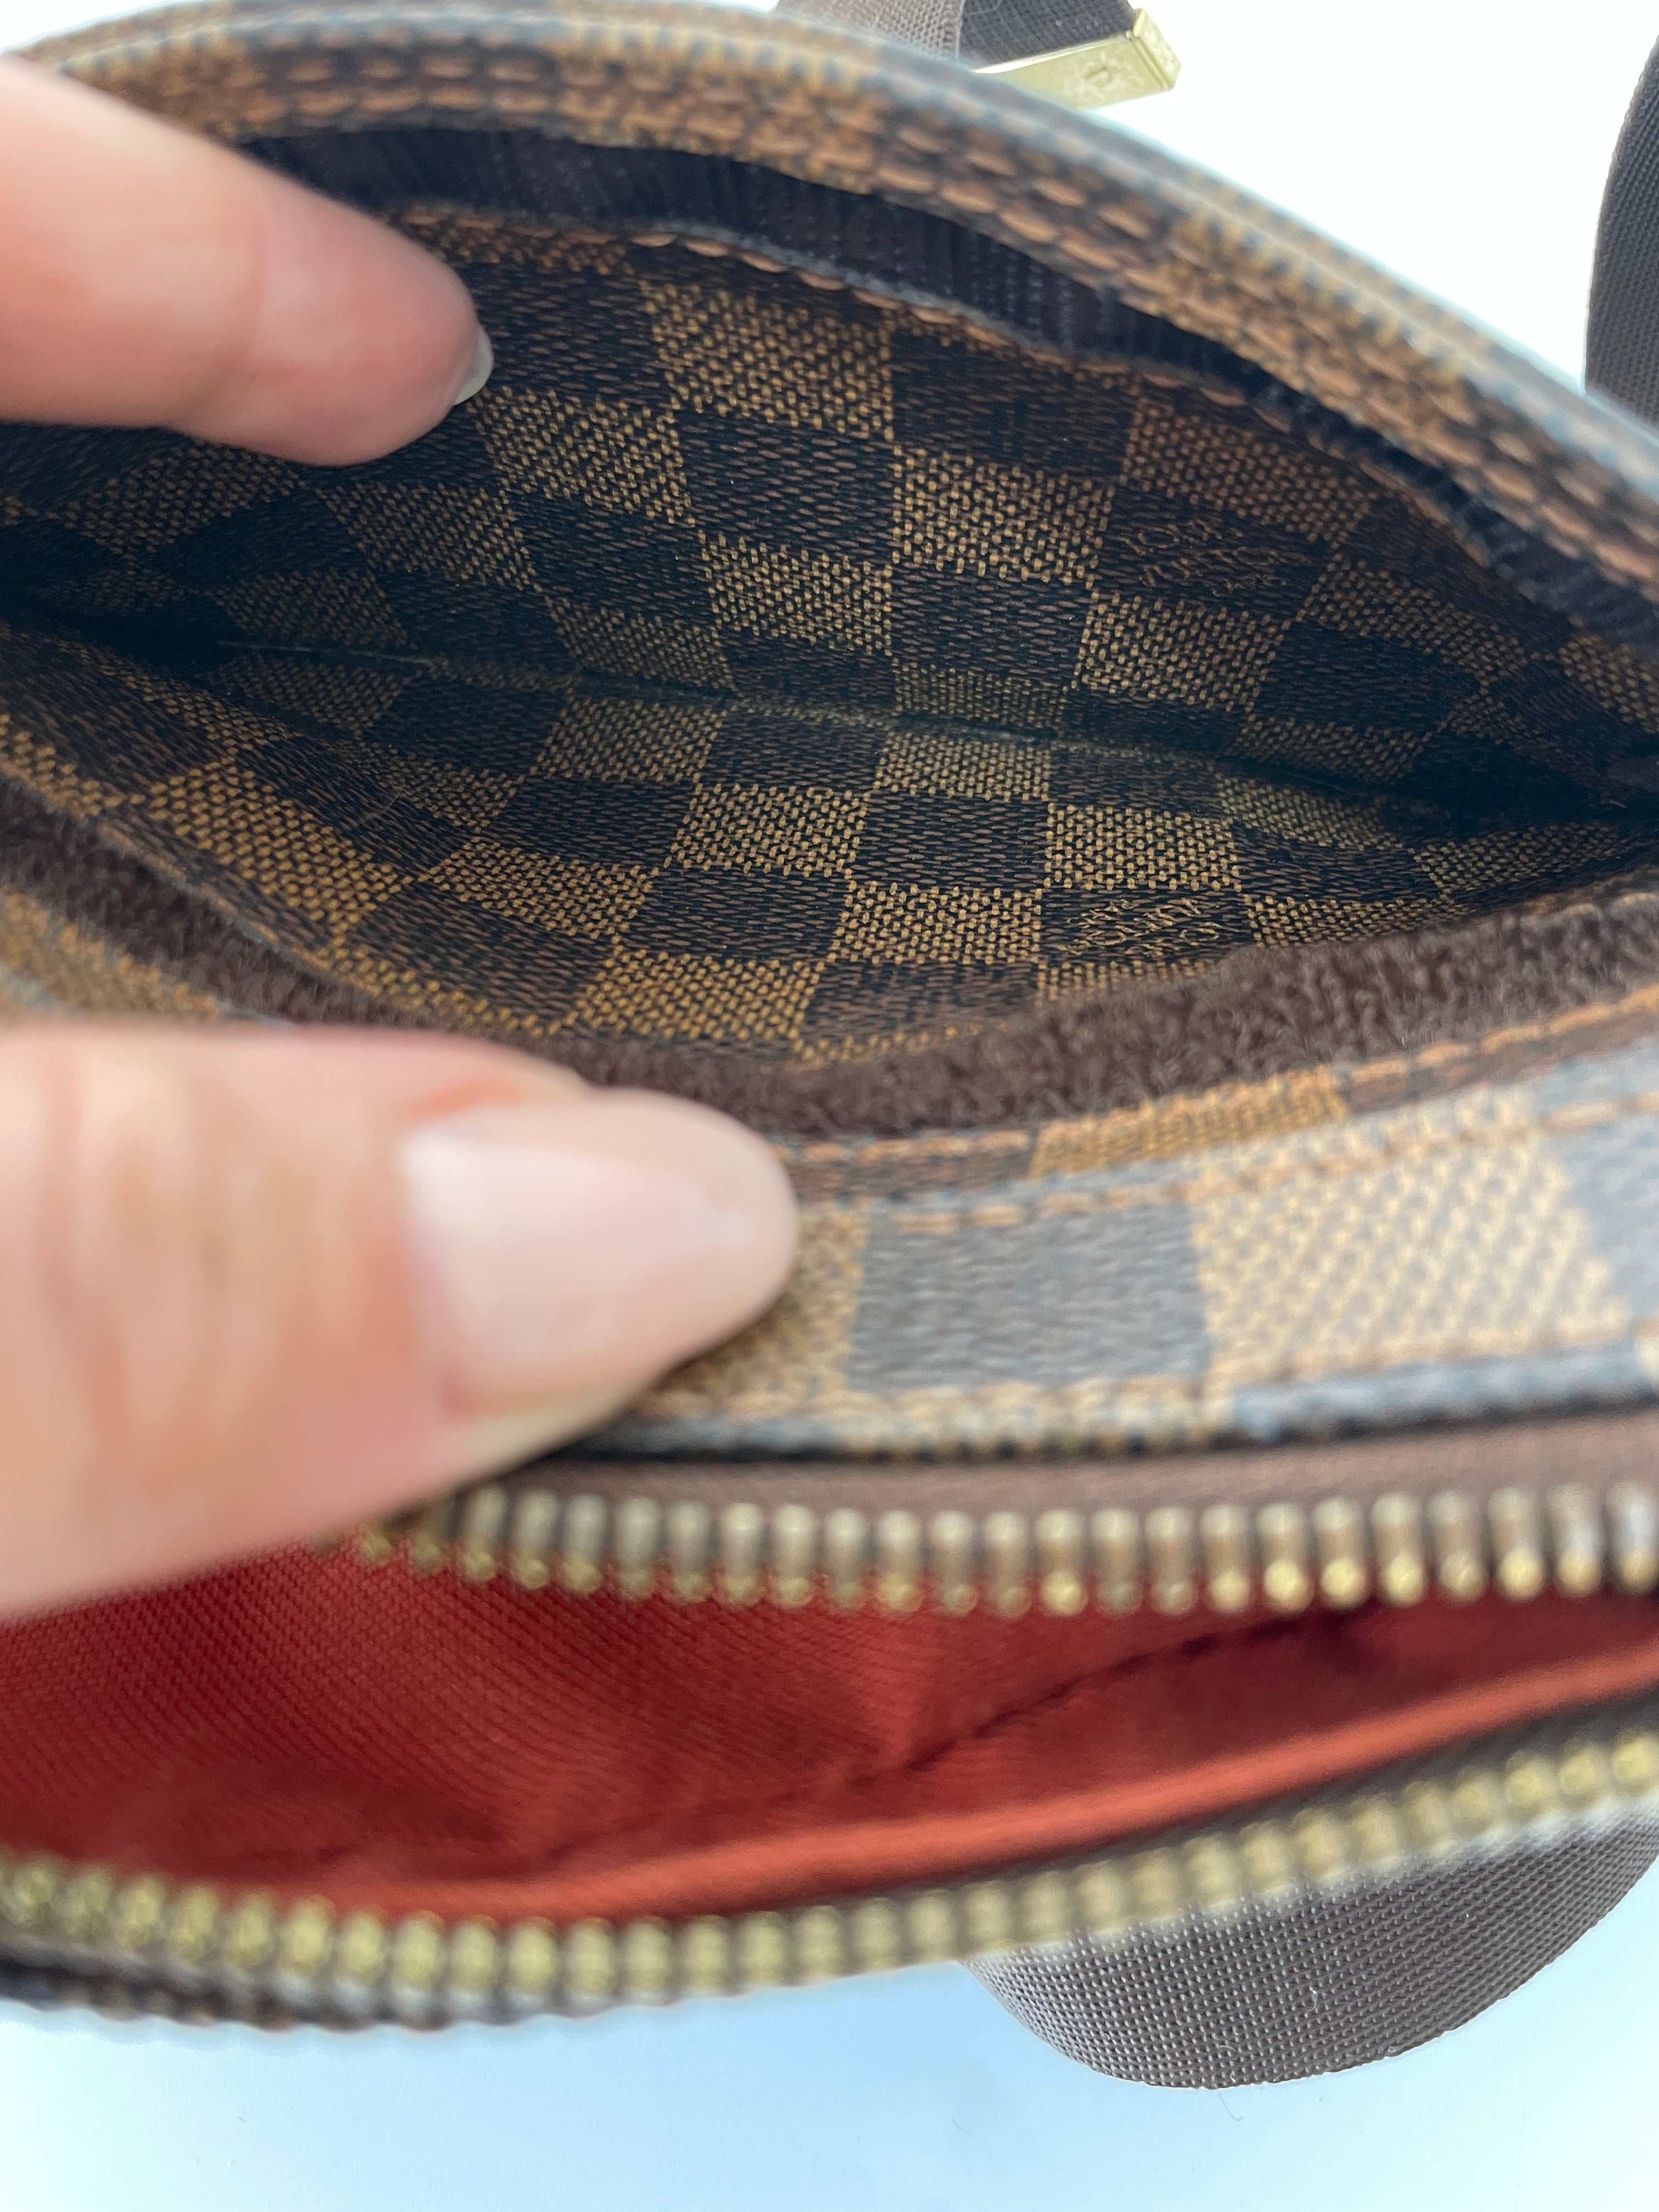 Louis Vuitton Geronimo Belt Bag Used (7136)